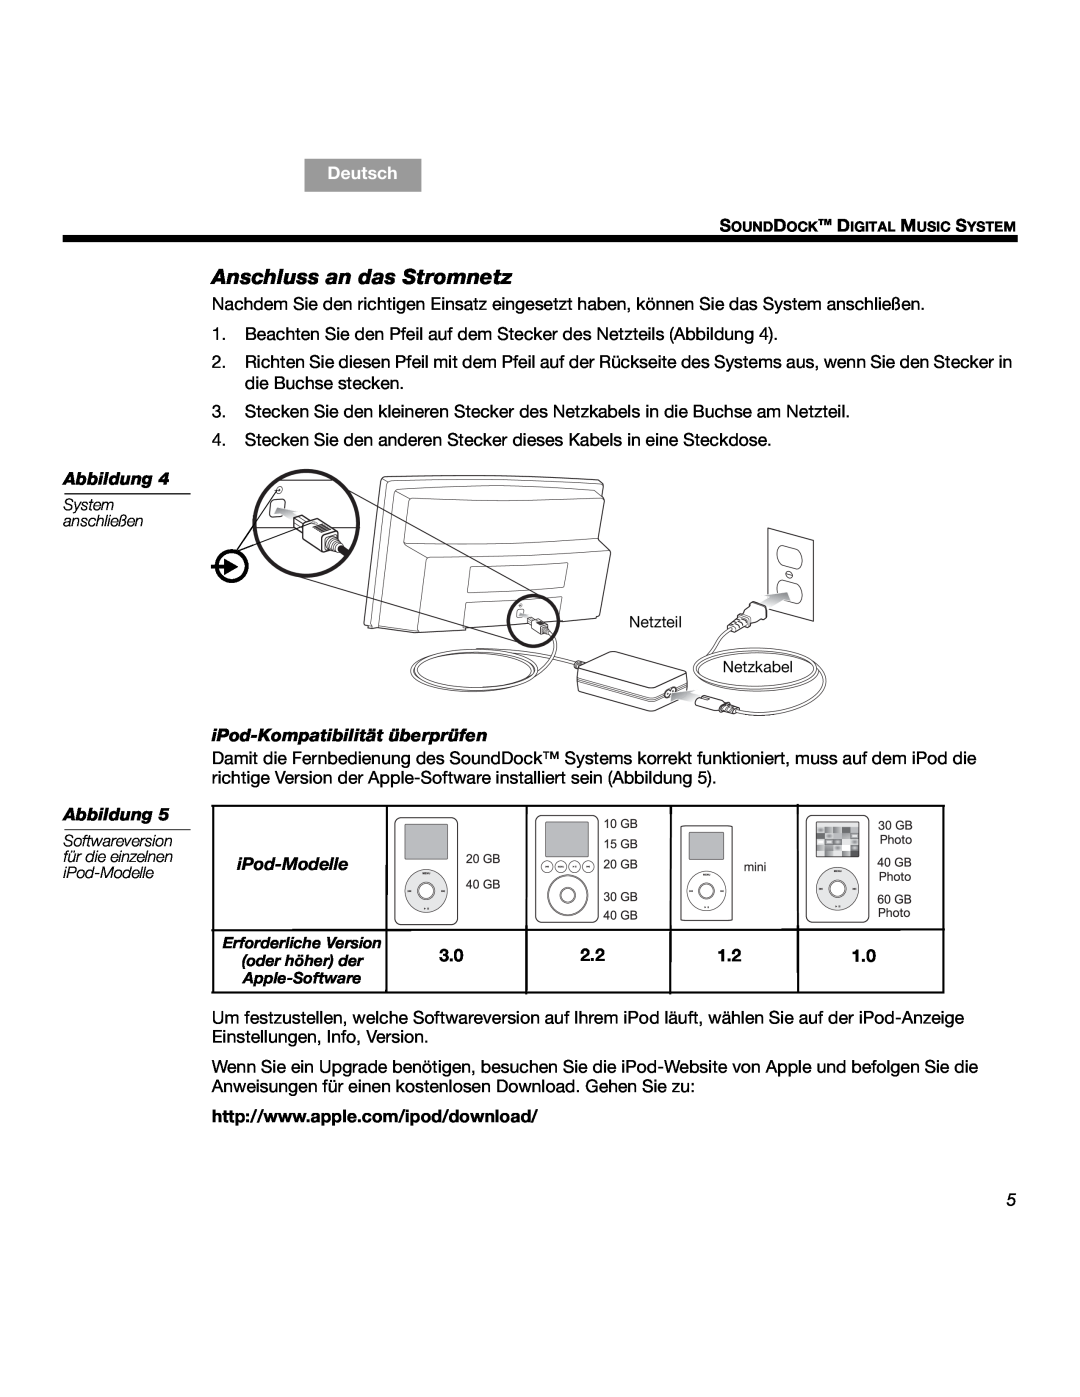 Bose SOUNDDOCKTM manual Anschluss an das Stromnetz, iPod-Kompatibilitätüberprüfen, iPod-Modelle, Deutsch, Abbildung 